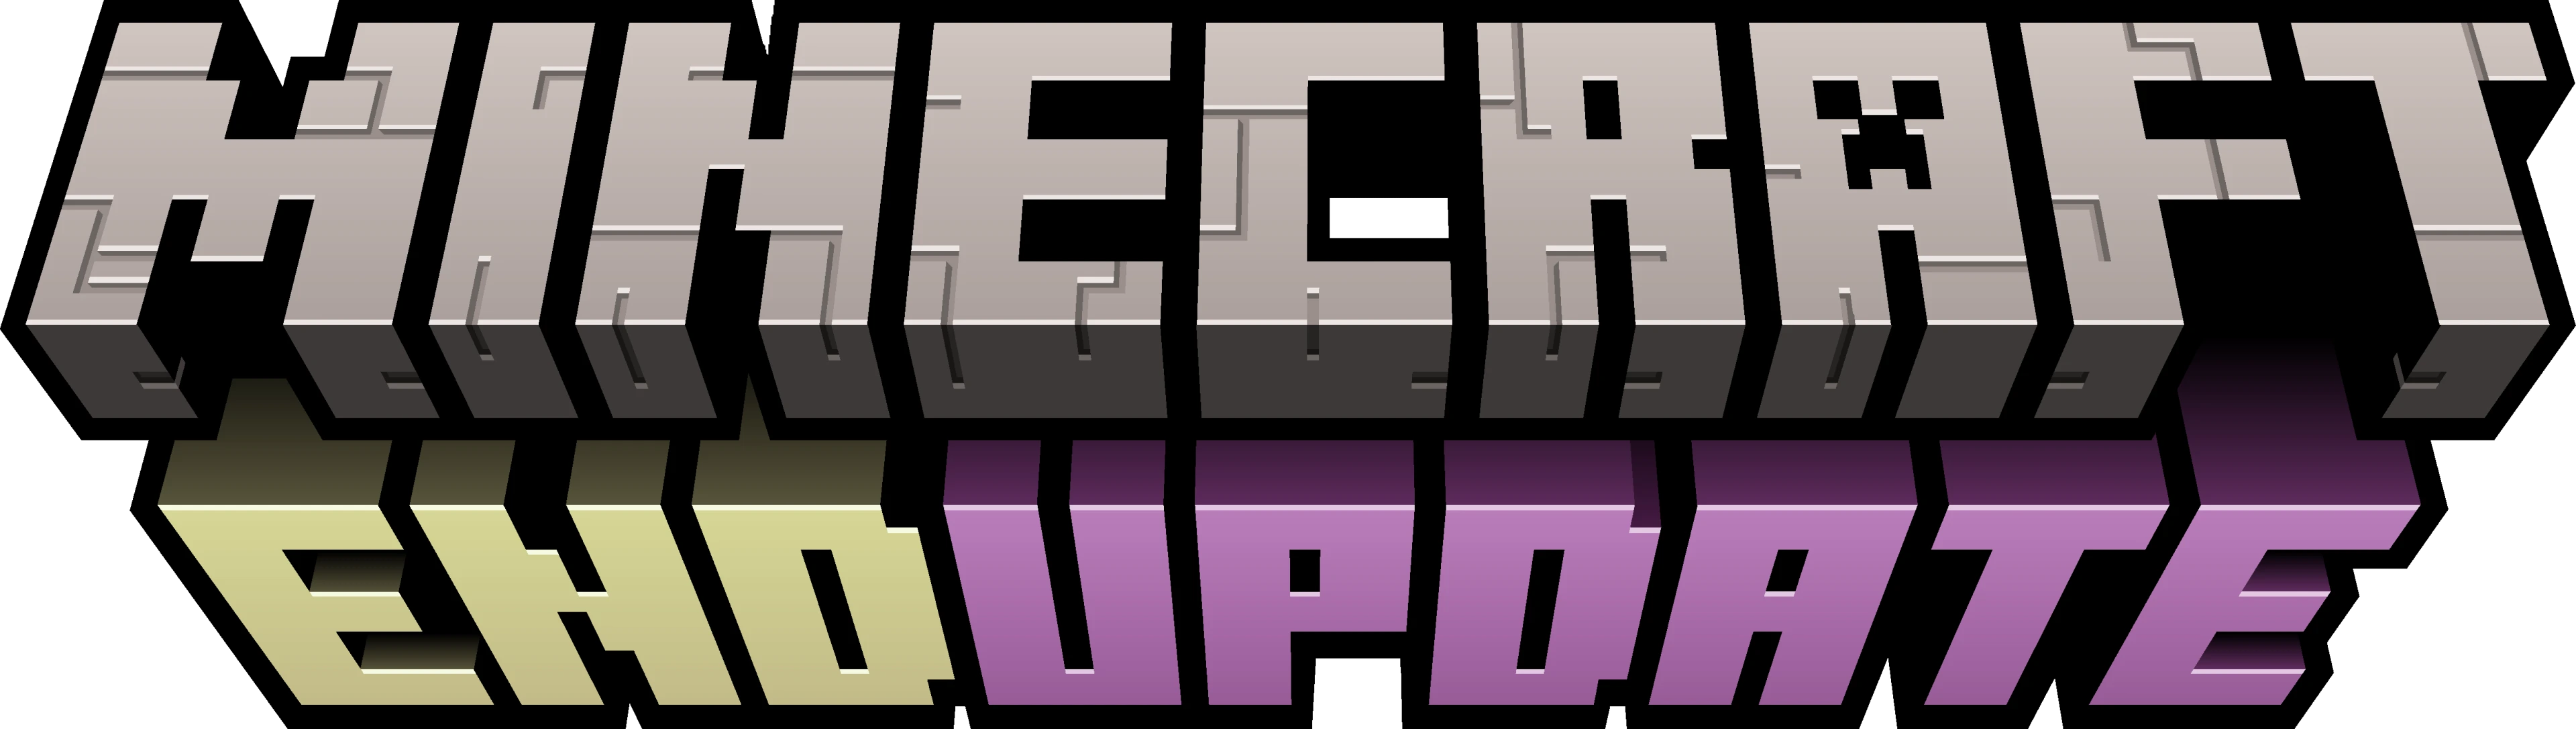 end update logo